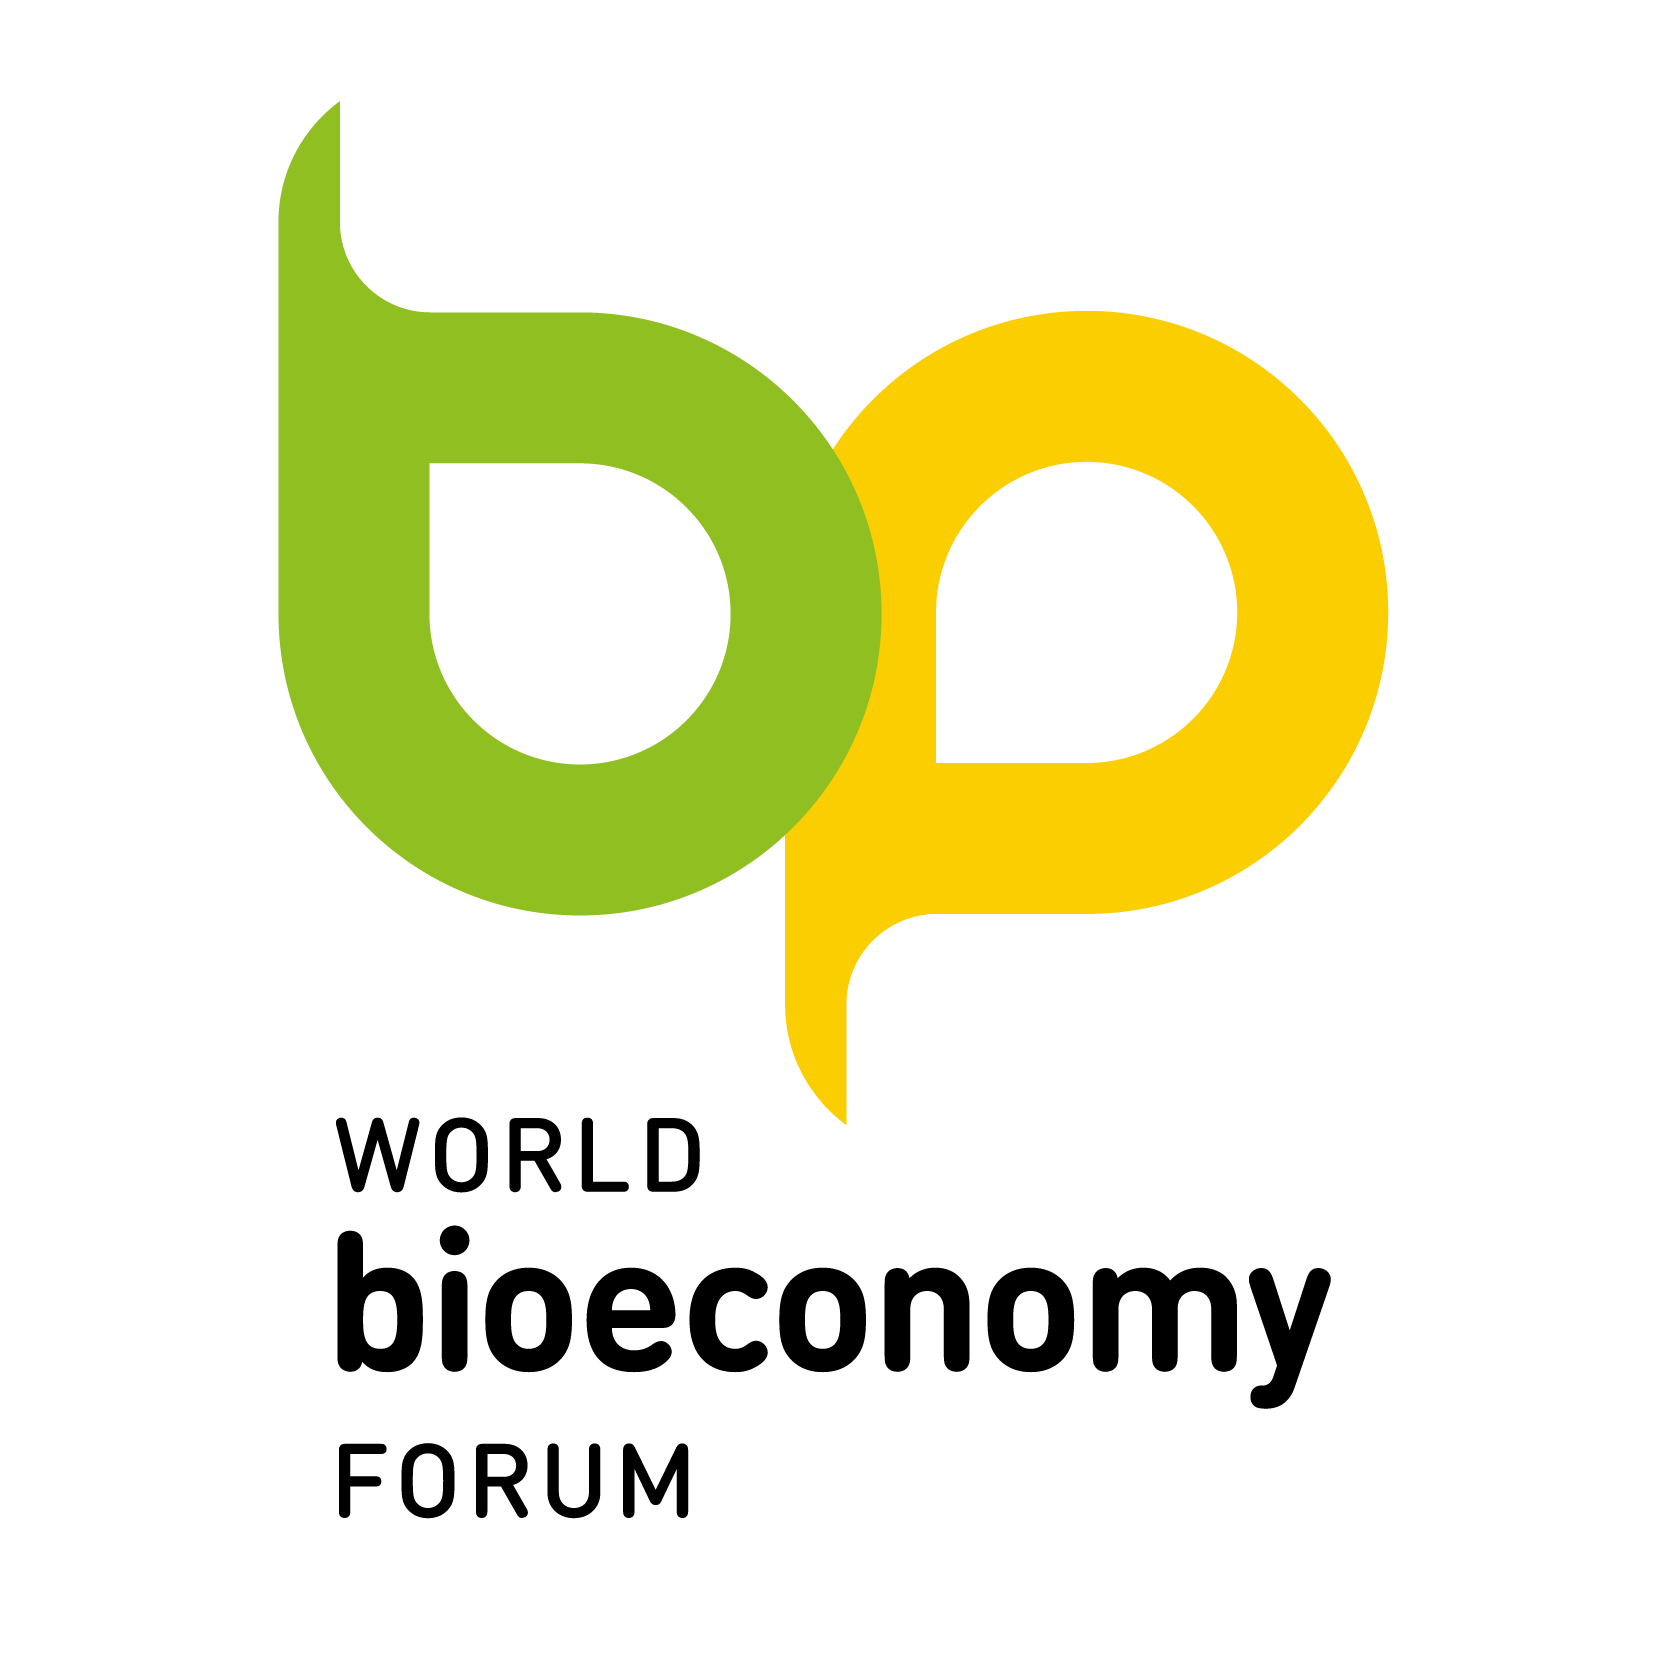 Forum Logo - Logo & Images - World Bioeconomy Forum